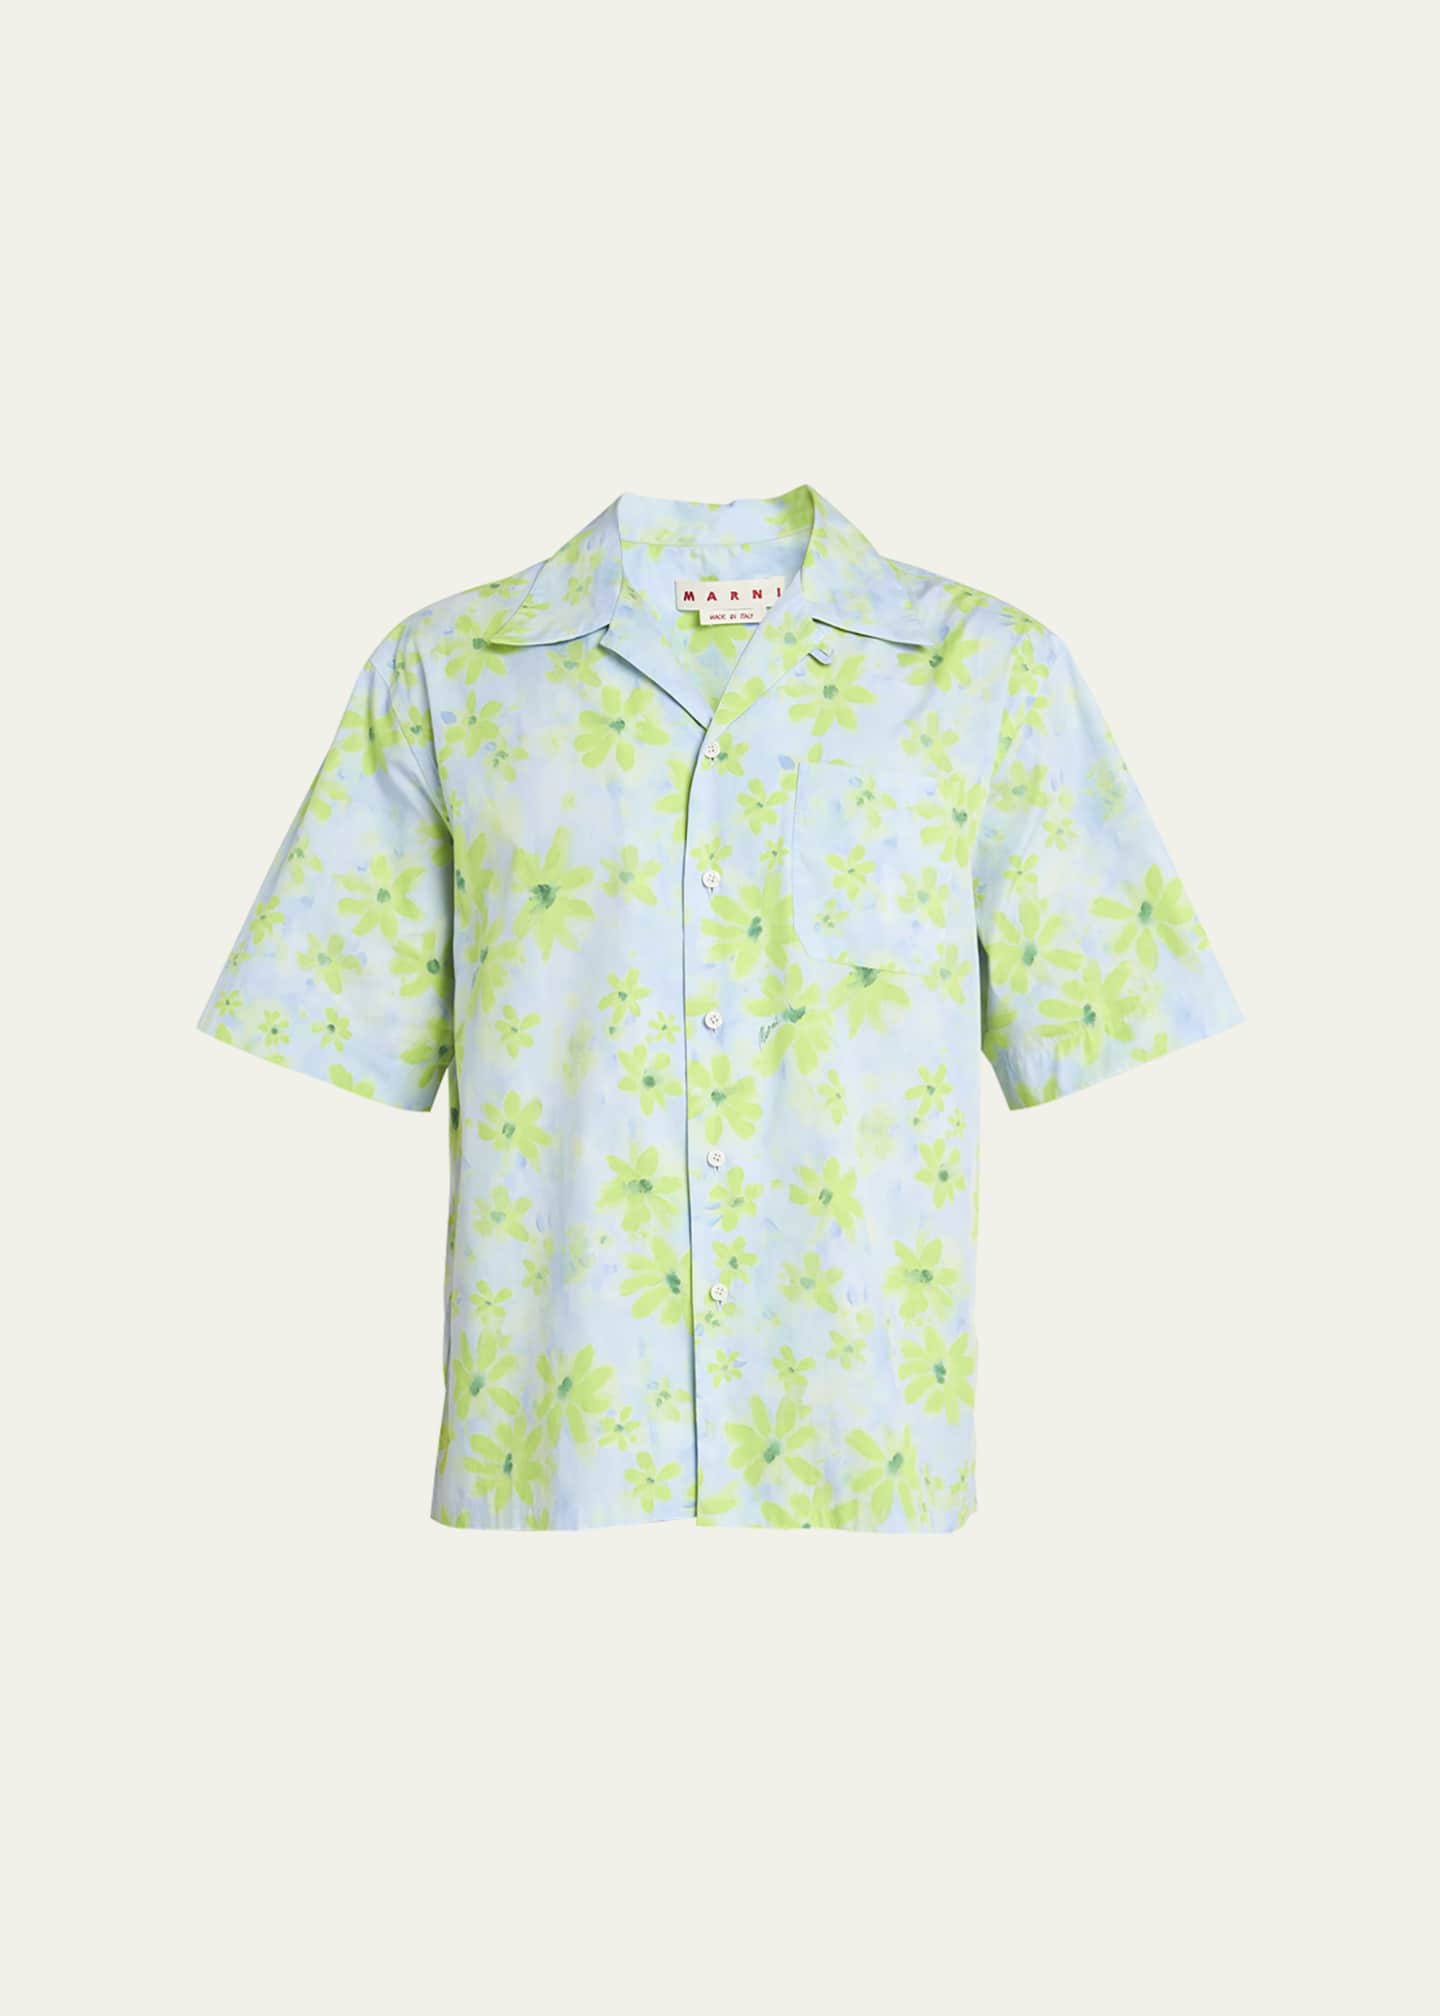 Marni Men's Acid Floral Camp Shirt